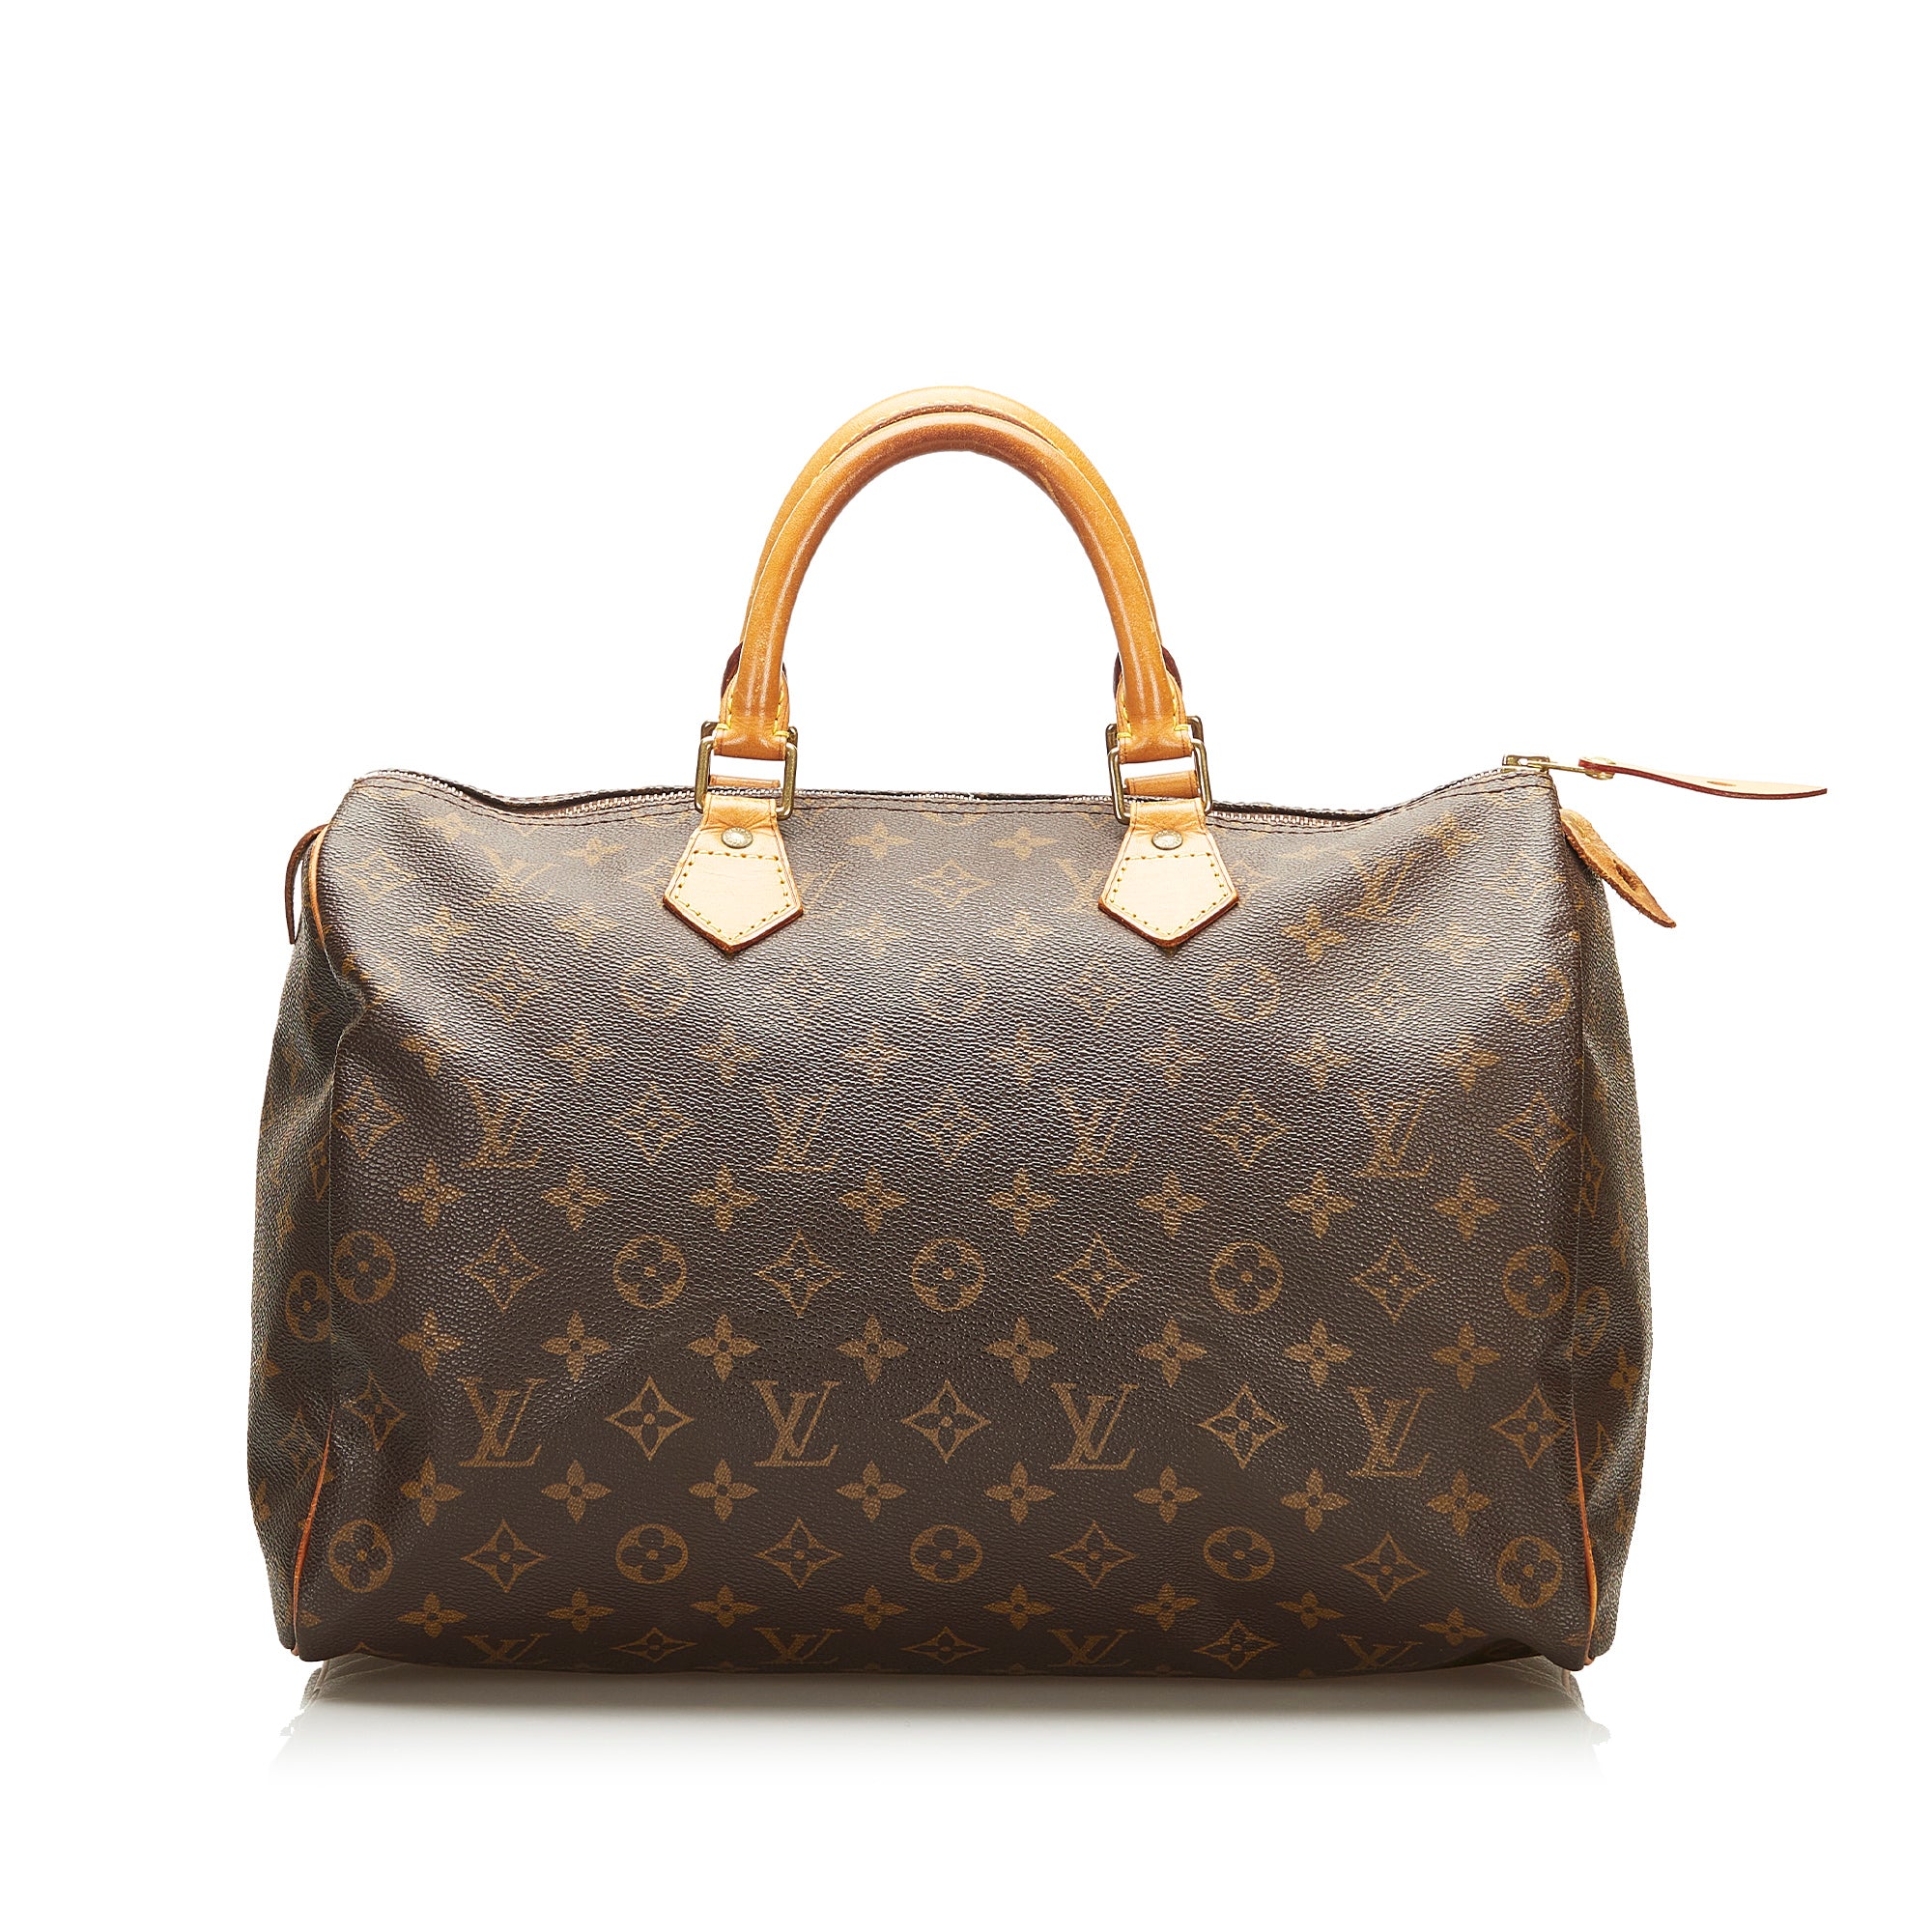 Louis Vuitton Speedy 35 Epi Leather Double Top Handle Bag on SALE